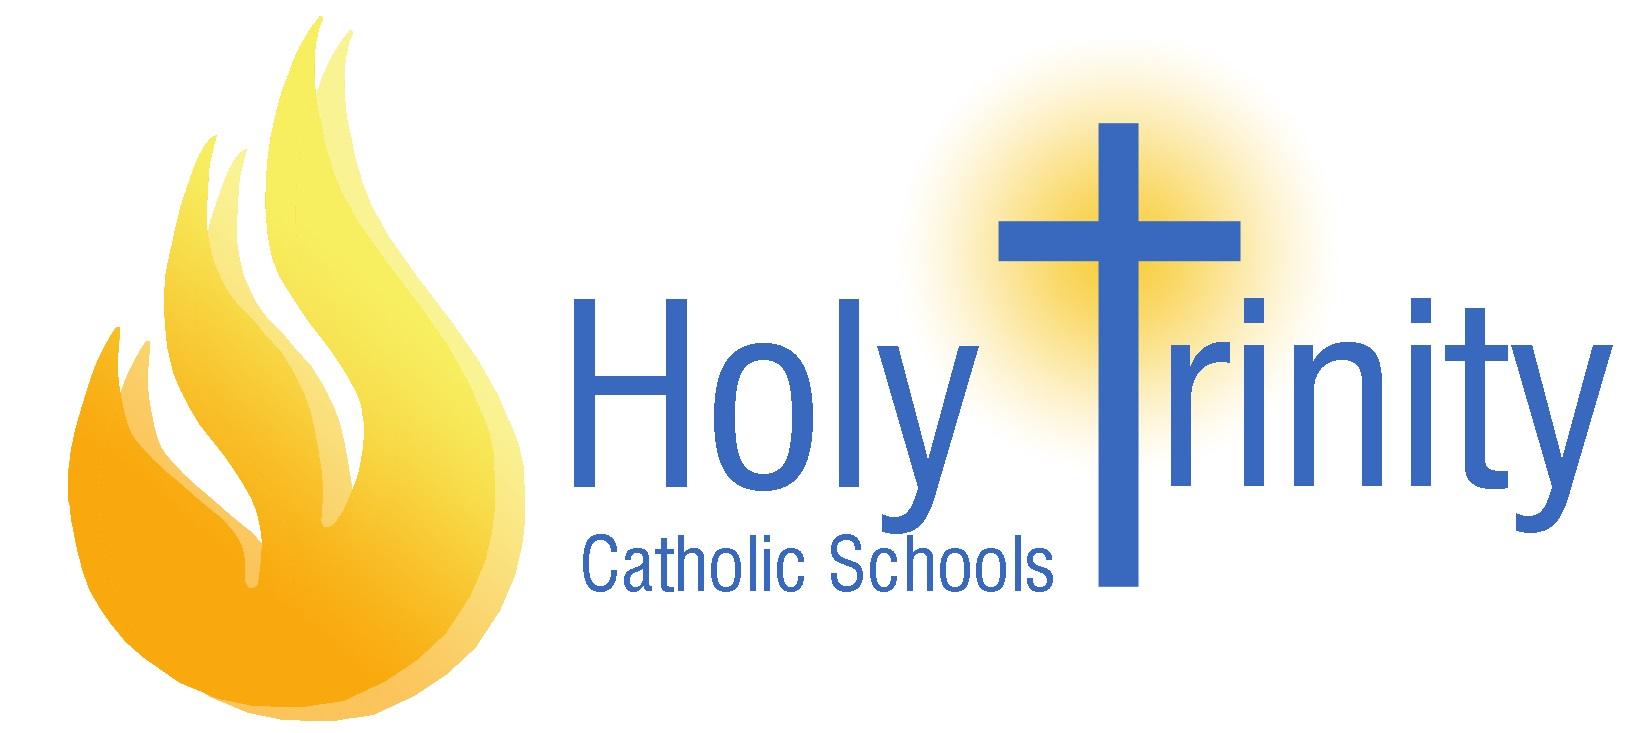 Holy Trinity Catholic School Division